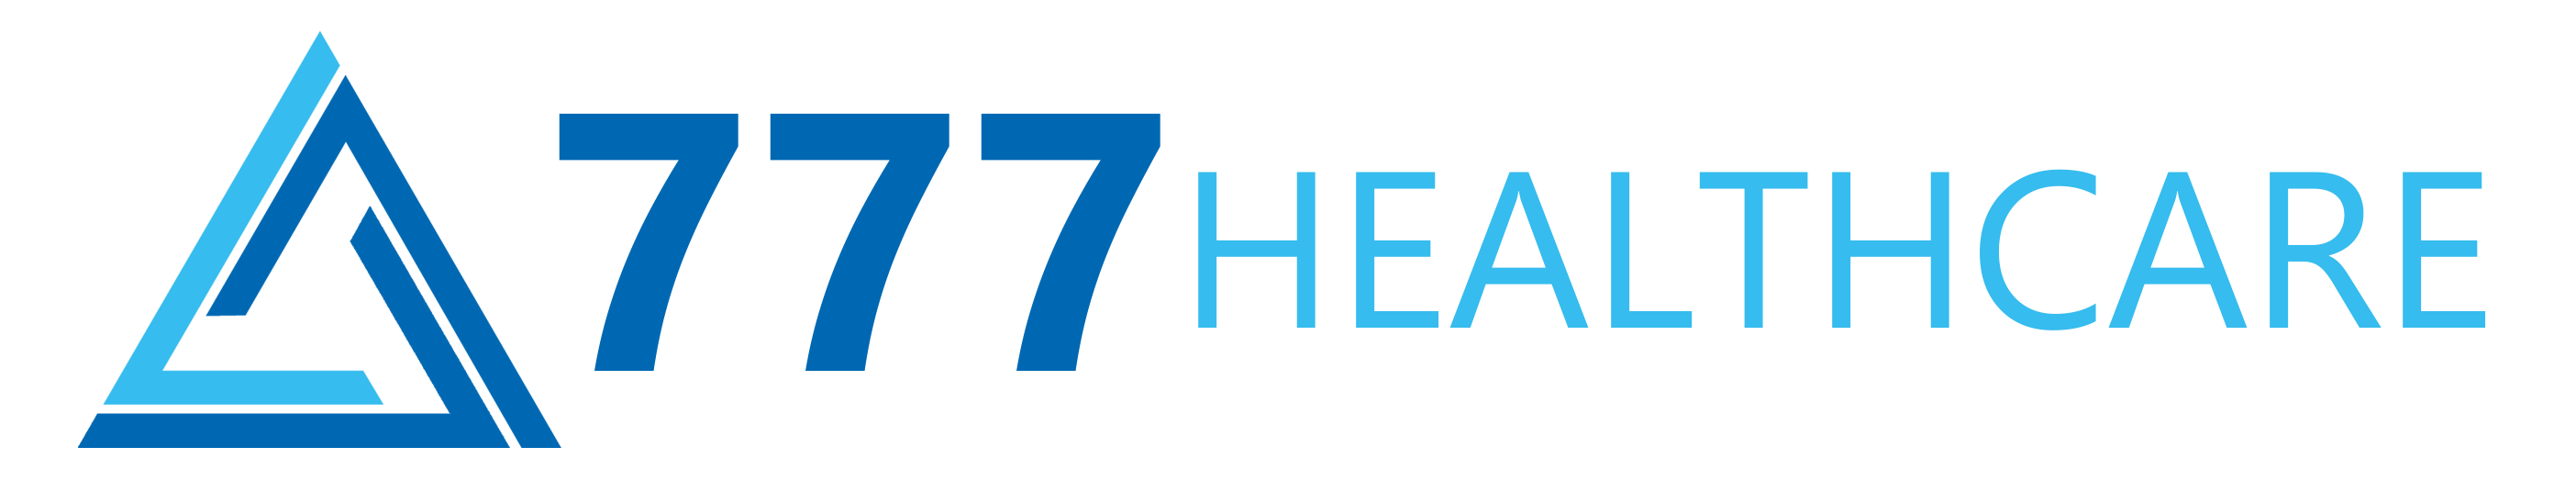 777 healthcare